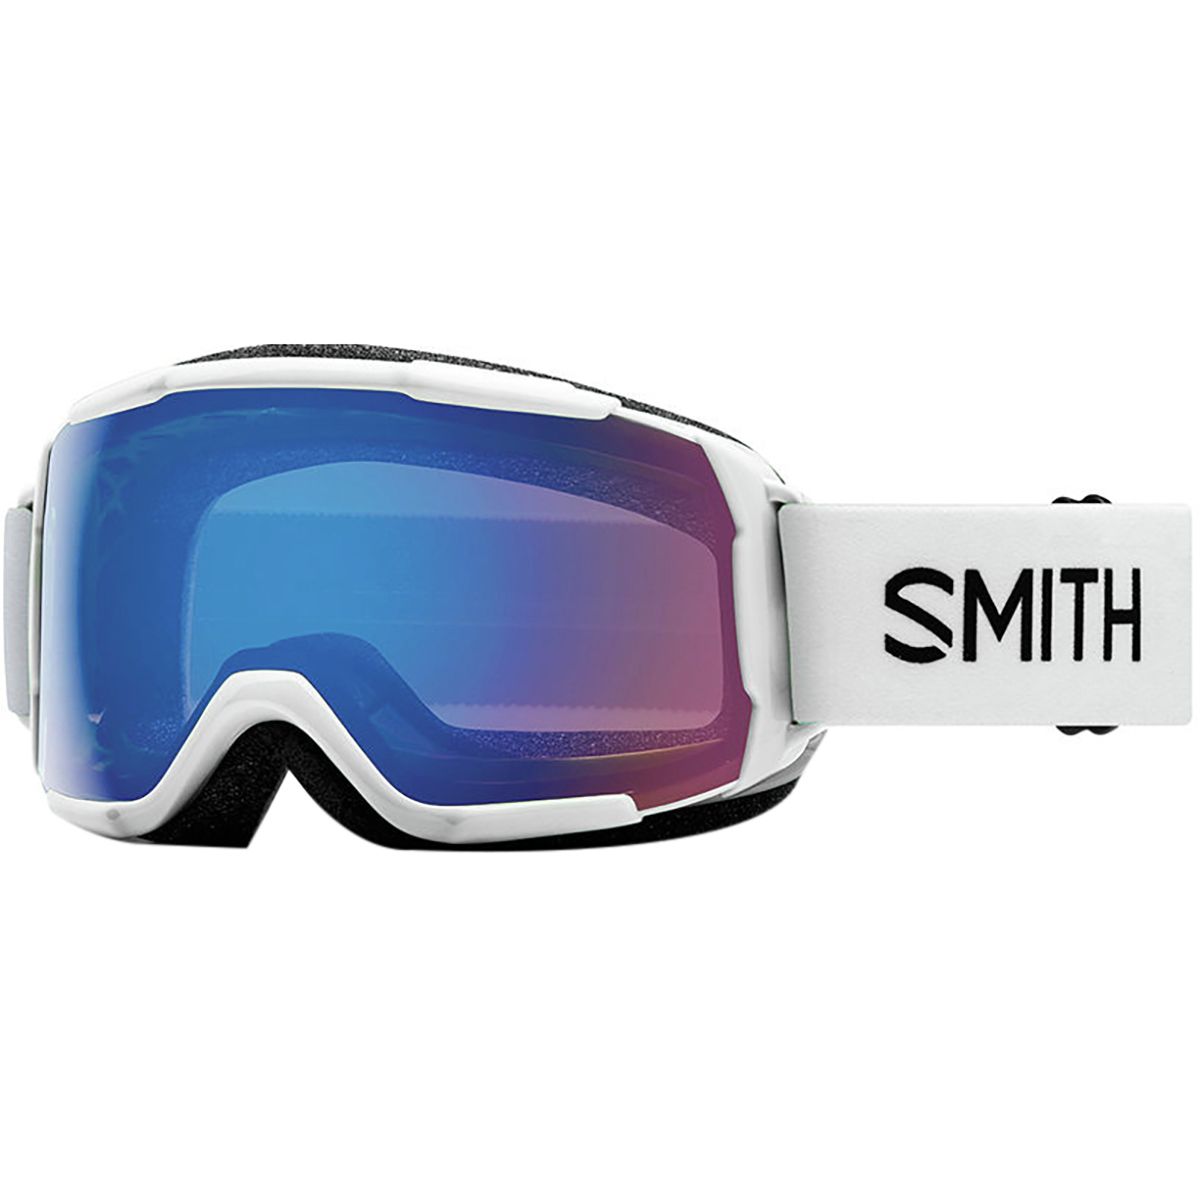 Smith Grom ChromaPop Goggles - Kids' White/Chroma Storm Rose Flash